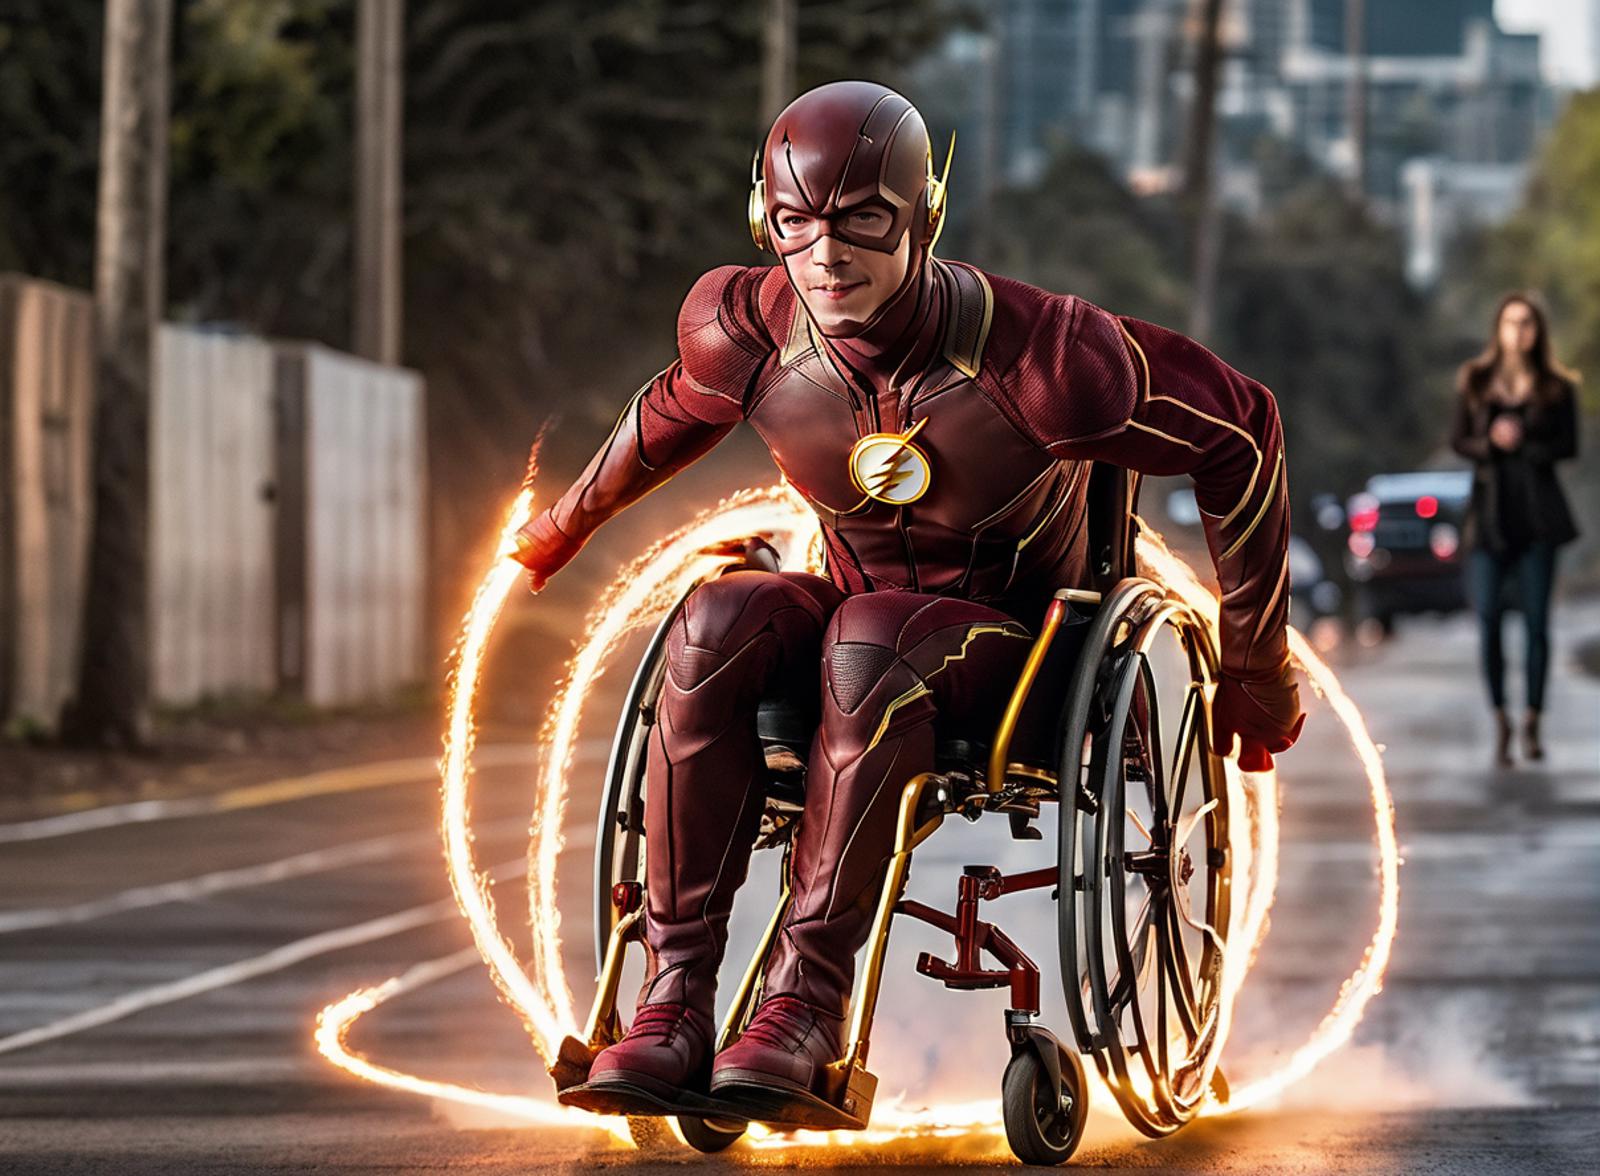 "The Flash in a Wheelchair"